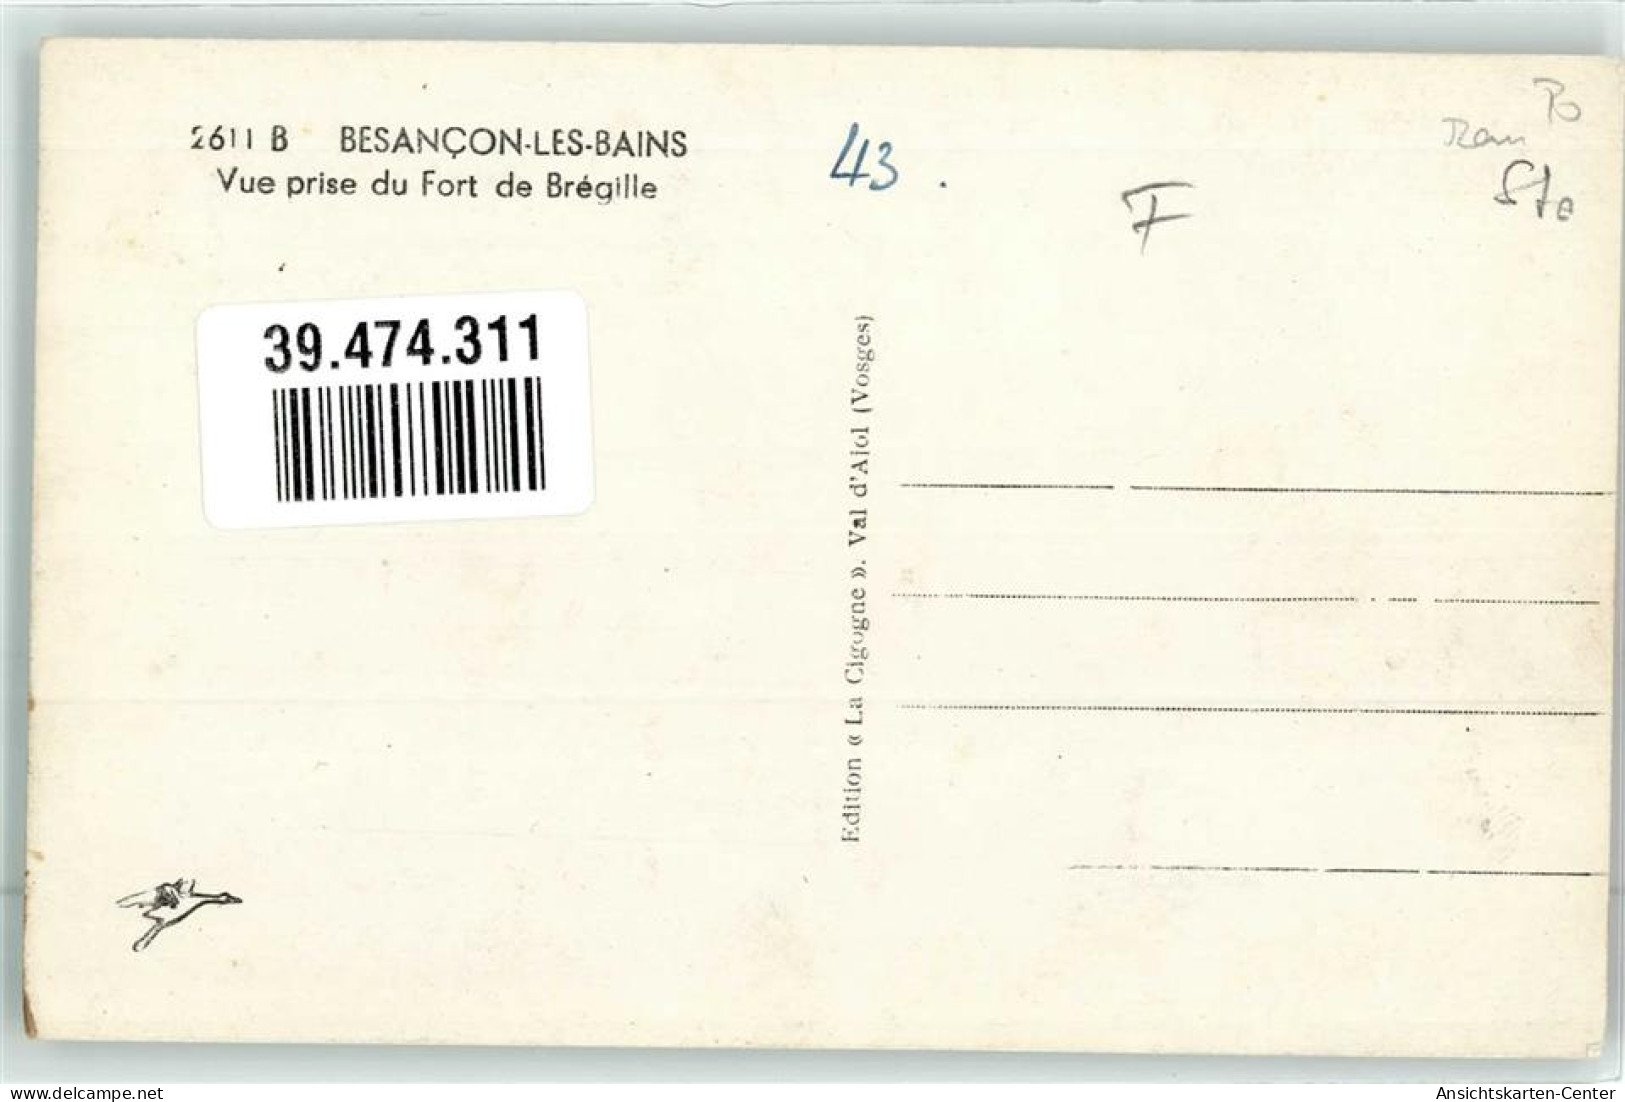 39474311 - Besancon - Besancon